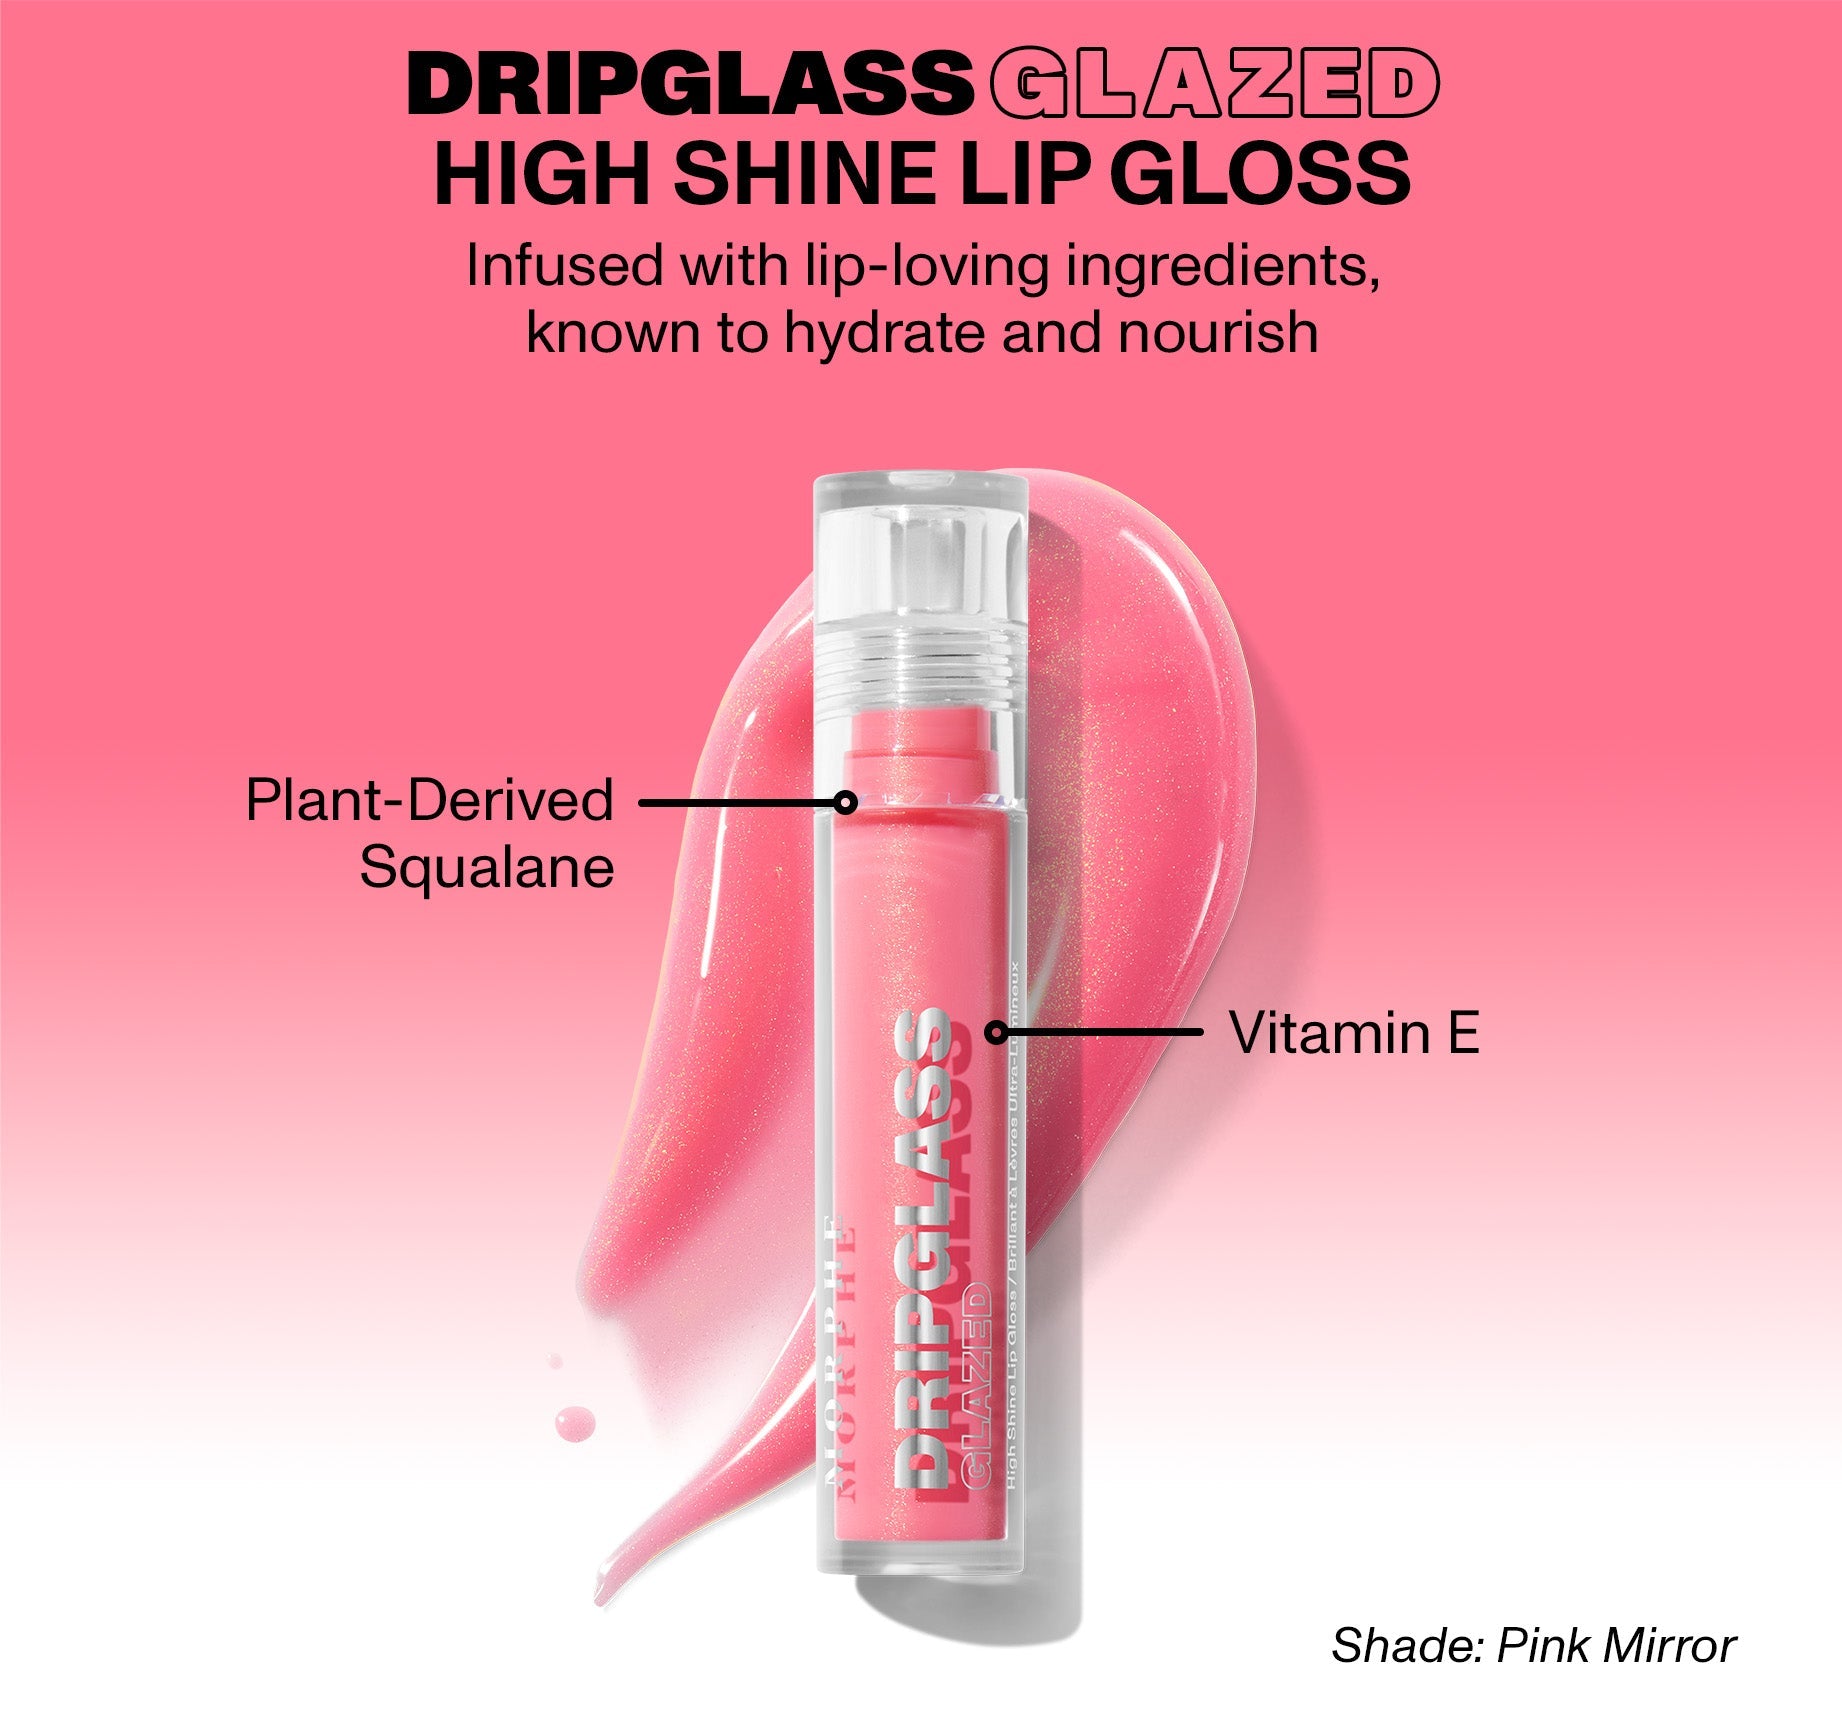 Dripglass Glazed High Shine Lip Gloss - So Transparent - Image 9